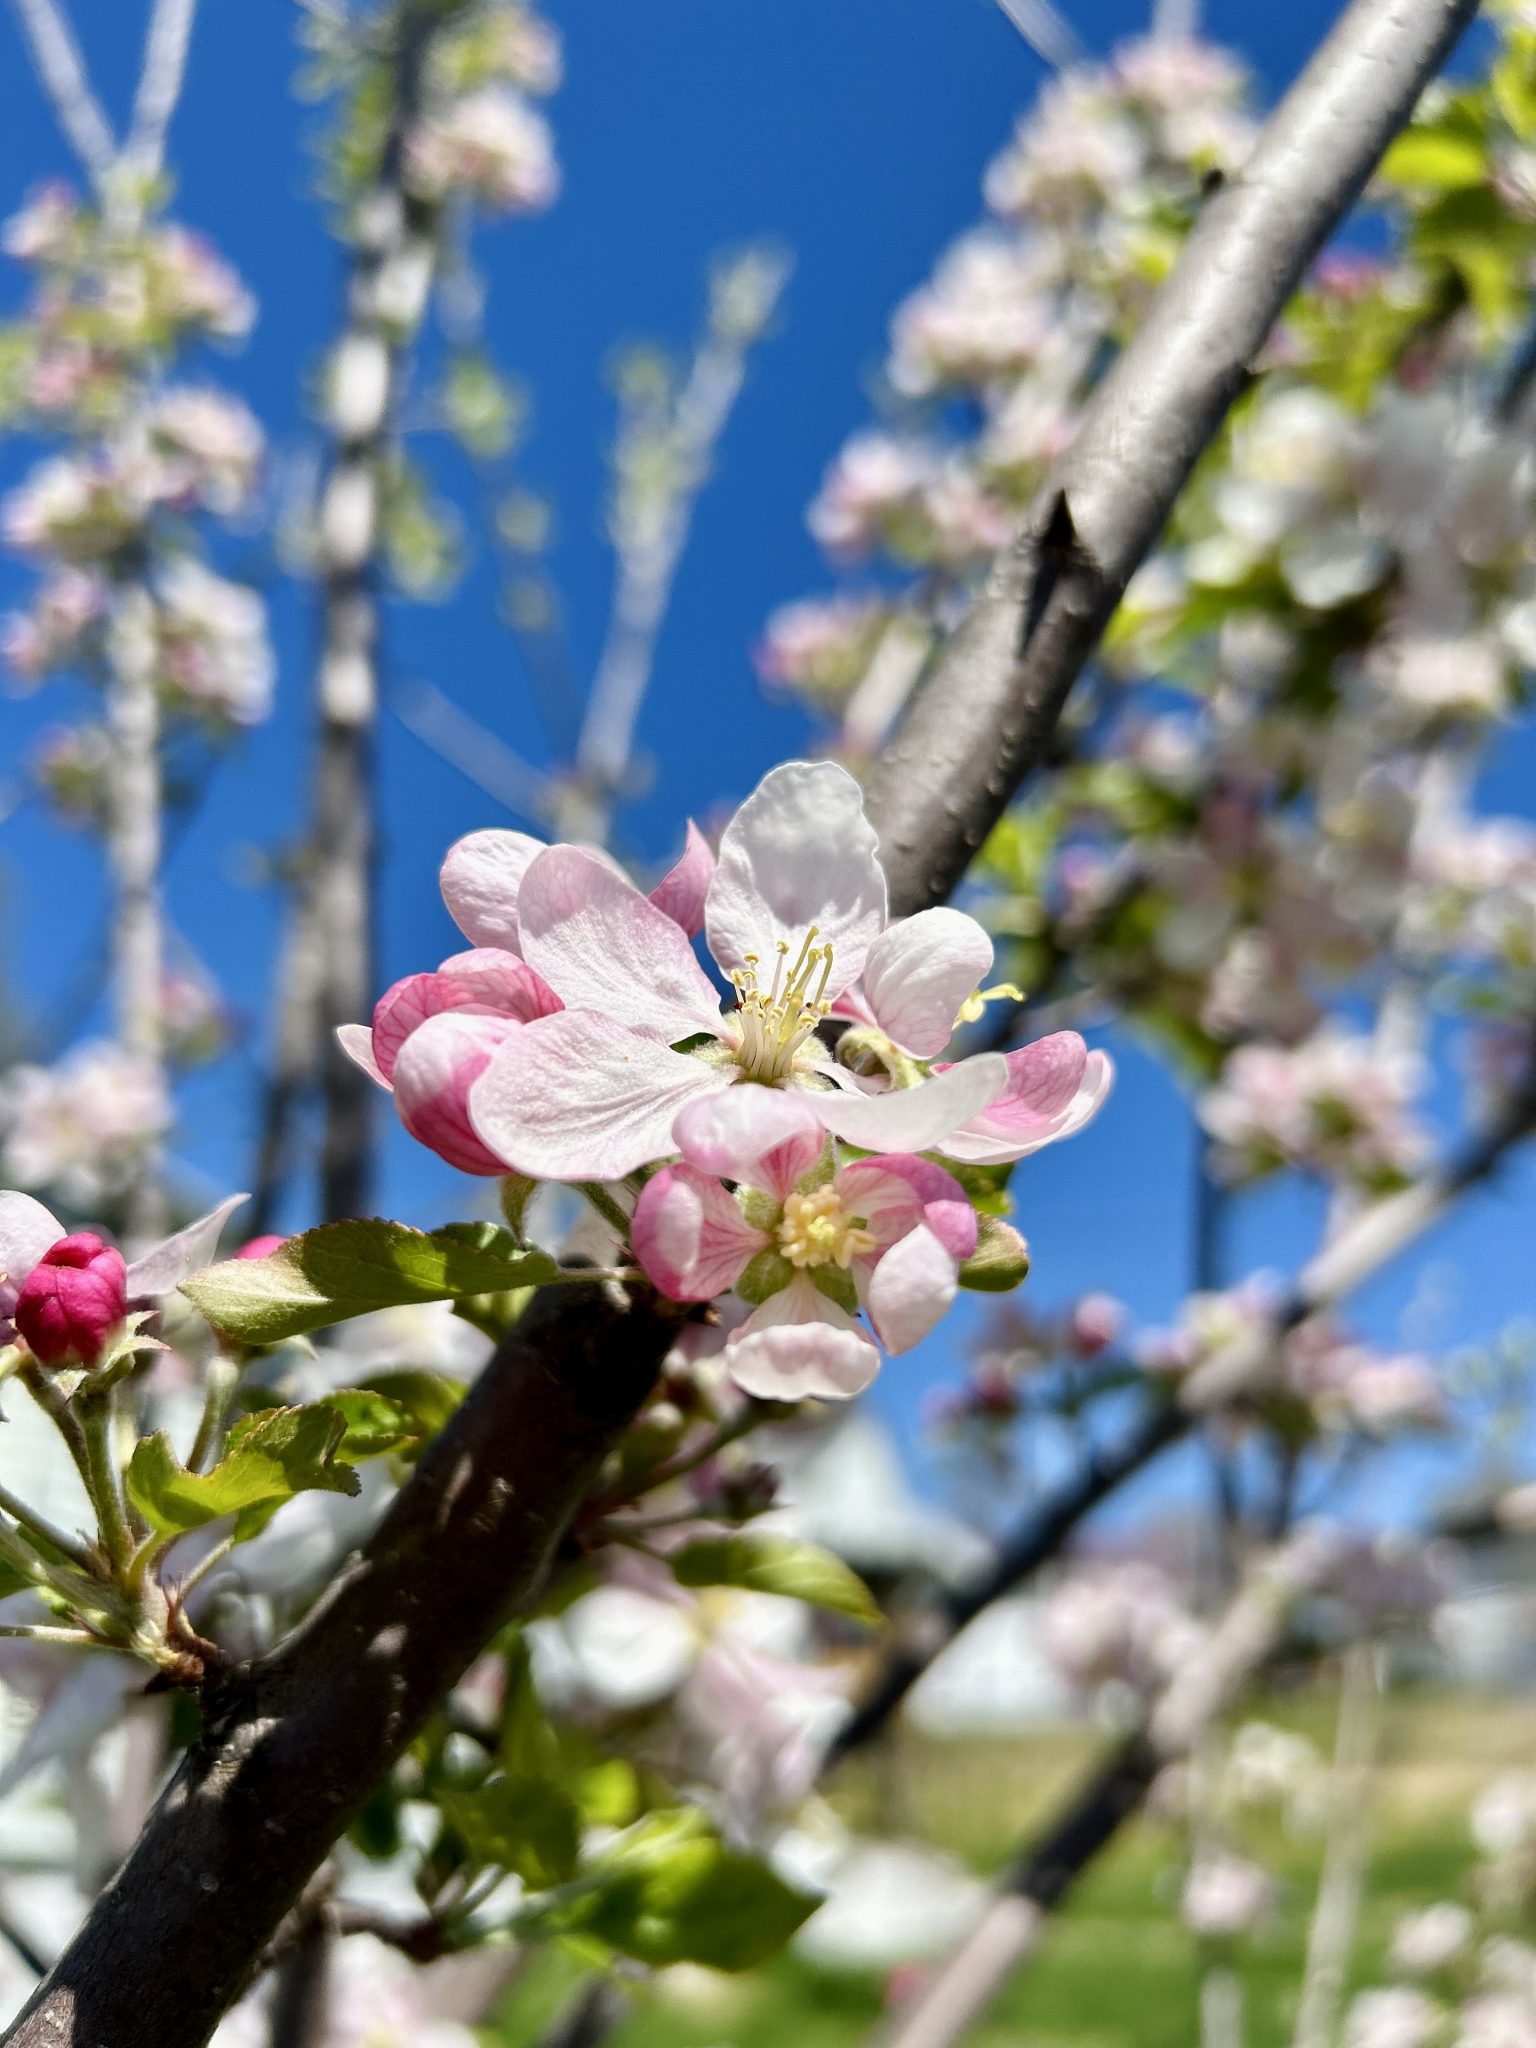 Apple tree blossom against a bright blue sky